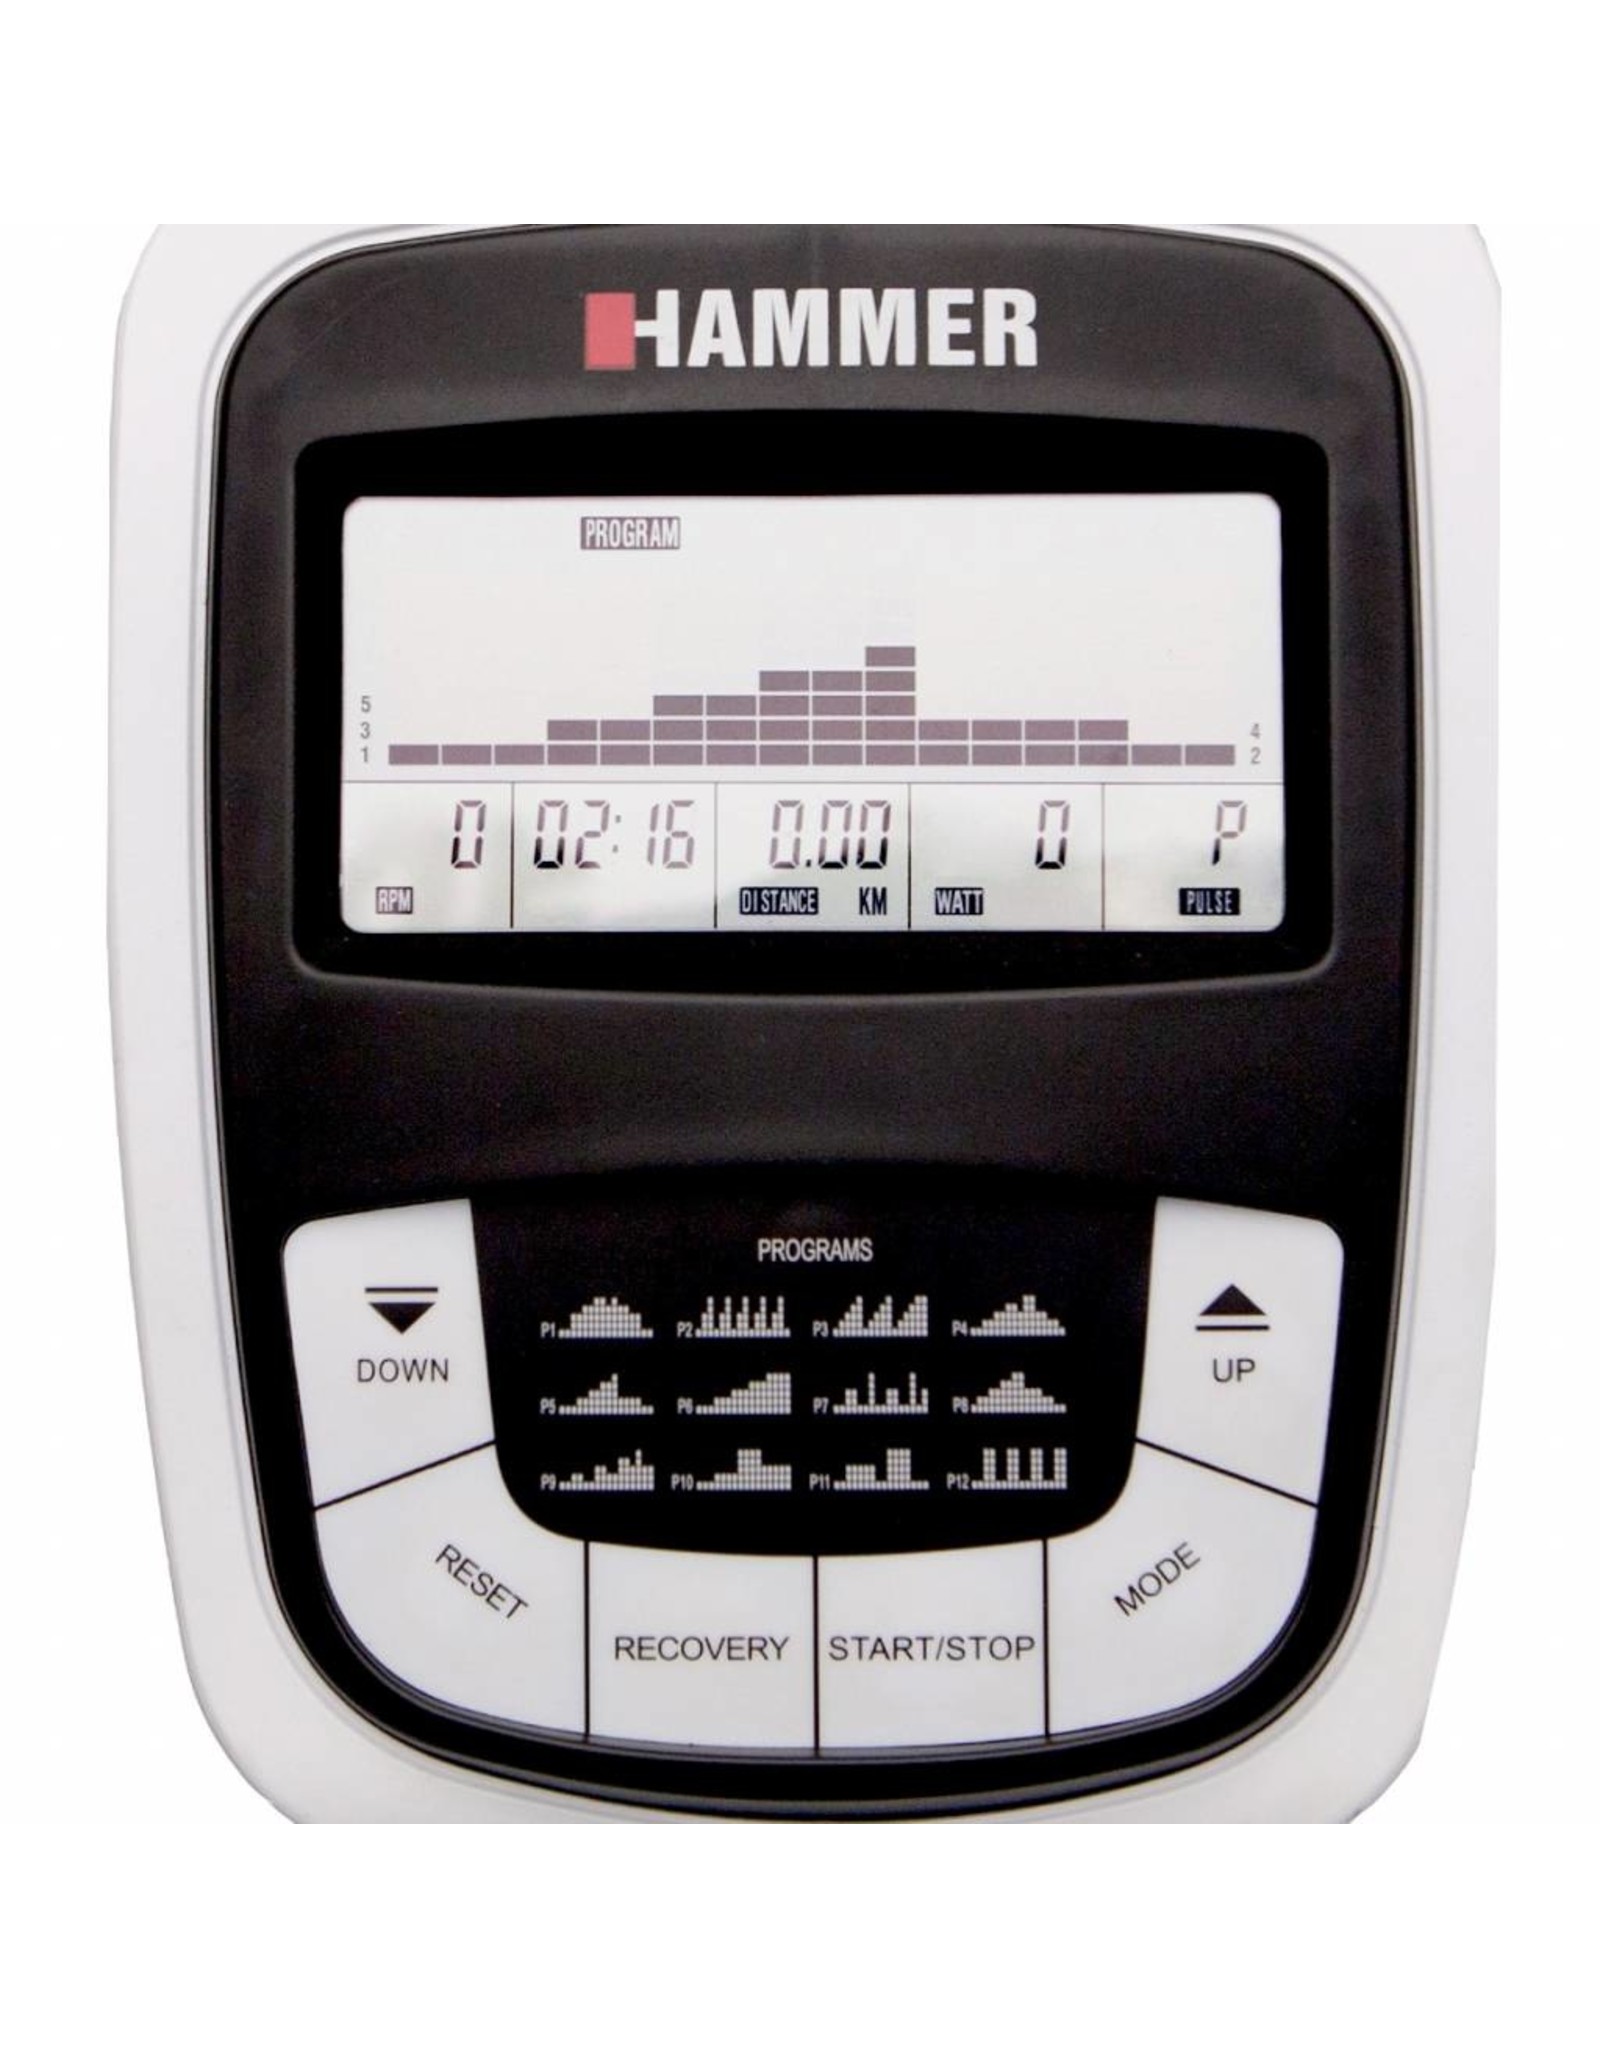 Hammer Fitness Hammer CARDIO XT5 Ergometer HA (EN 957-1/5)